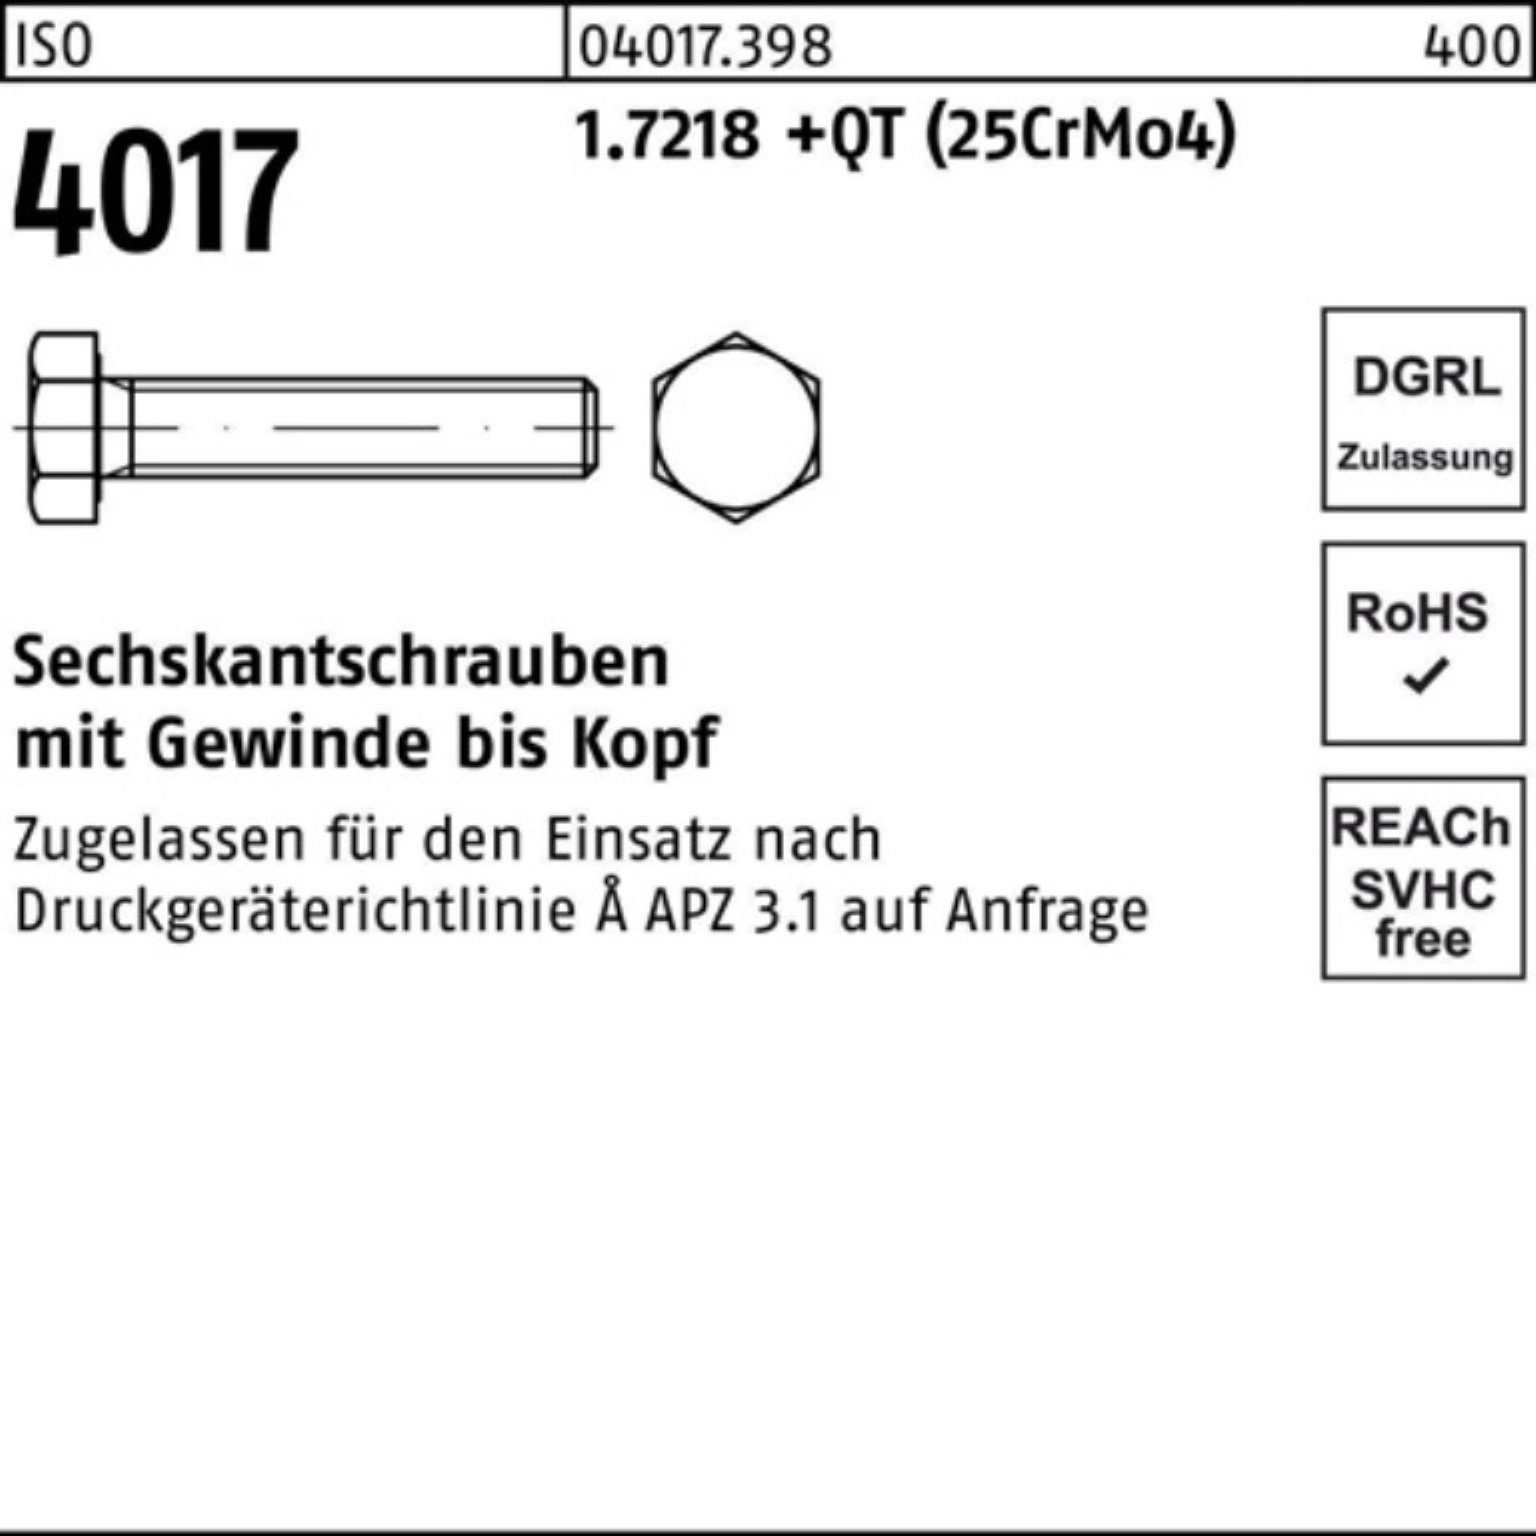 Bufab Sechskantschraube 100er Pack Sechskantschraube 1.7218 +QT 4017 M12x VG (25CrMo4) ISO 55